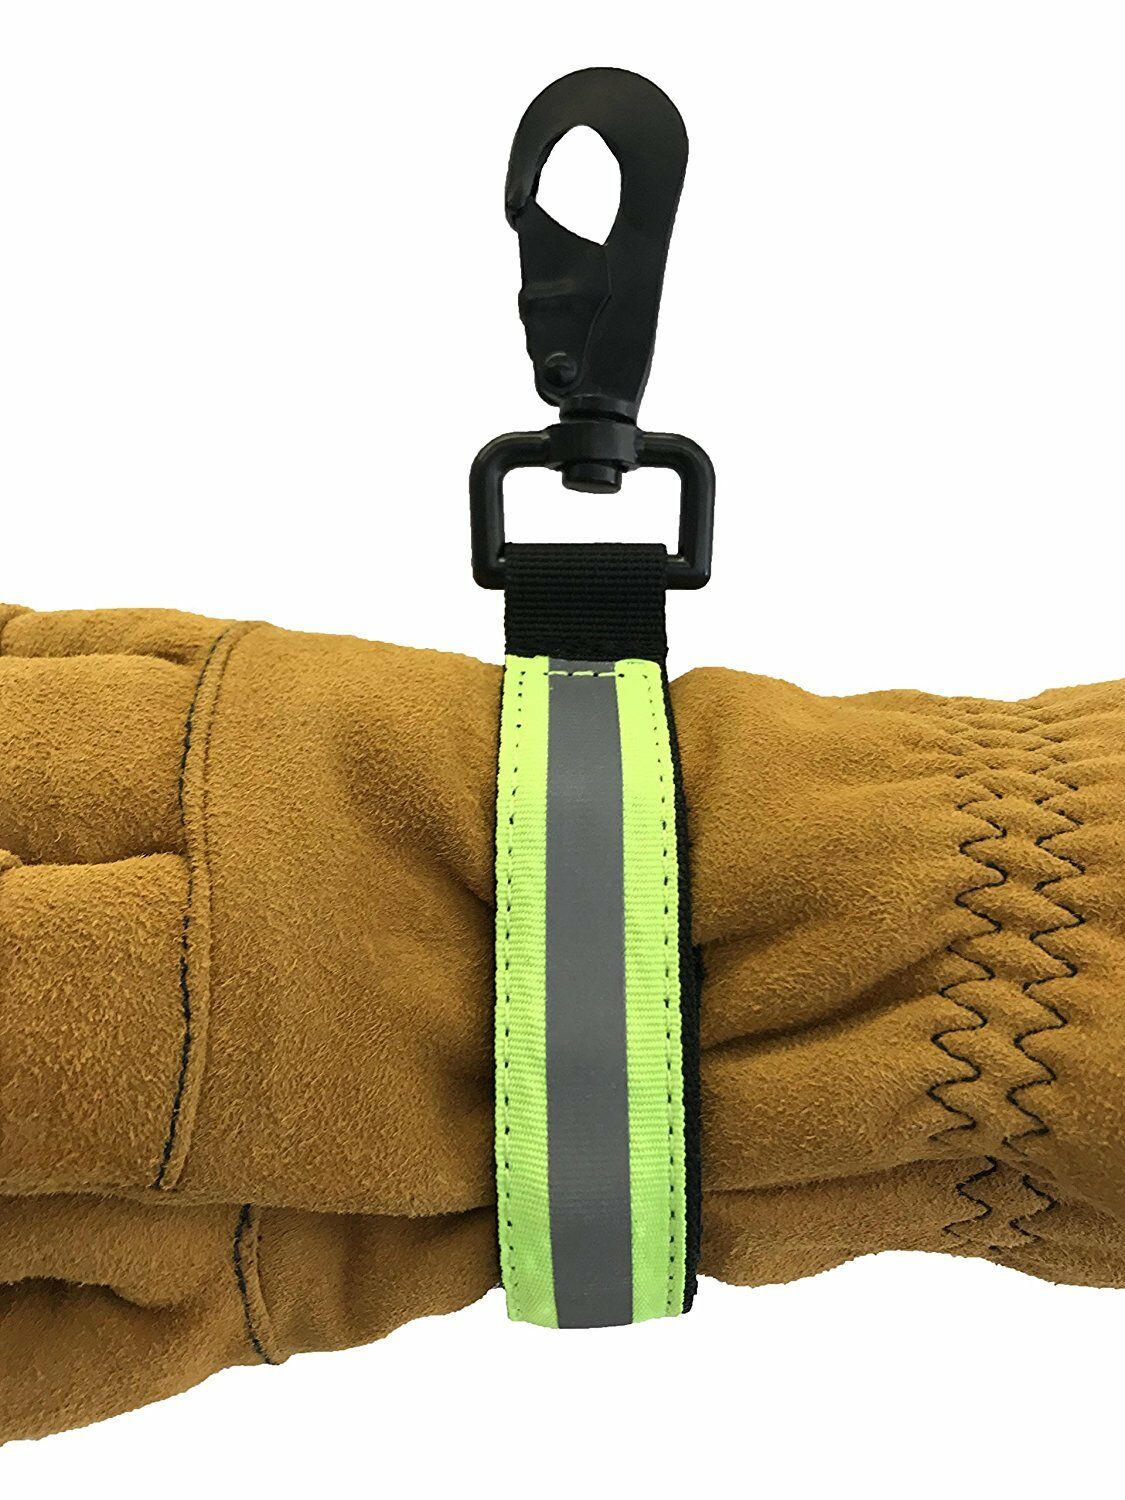 Line2design Firefighter Glove Strap Heavy Duty Turnout Gear Reflective - Green